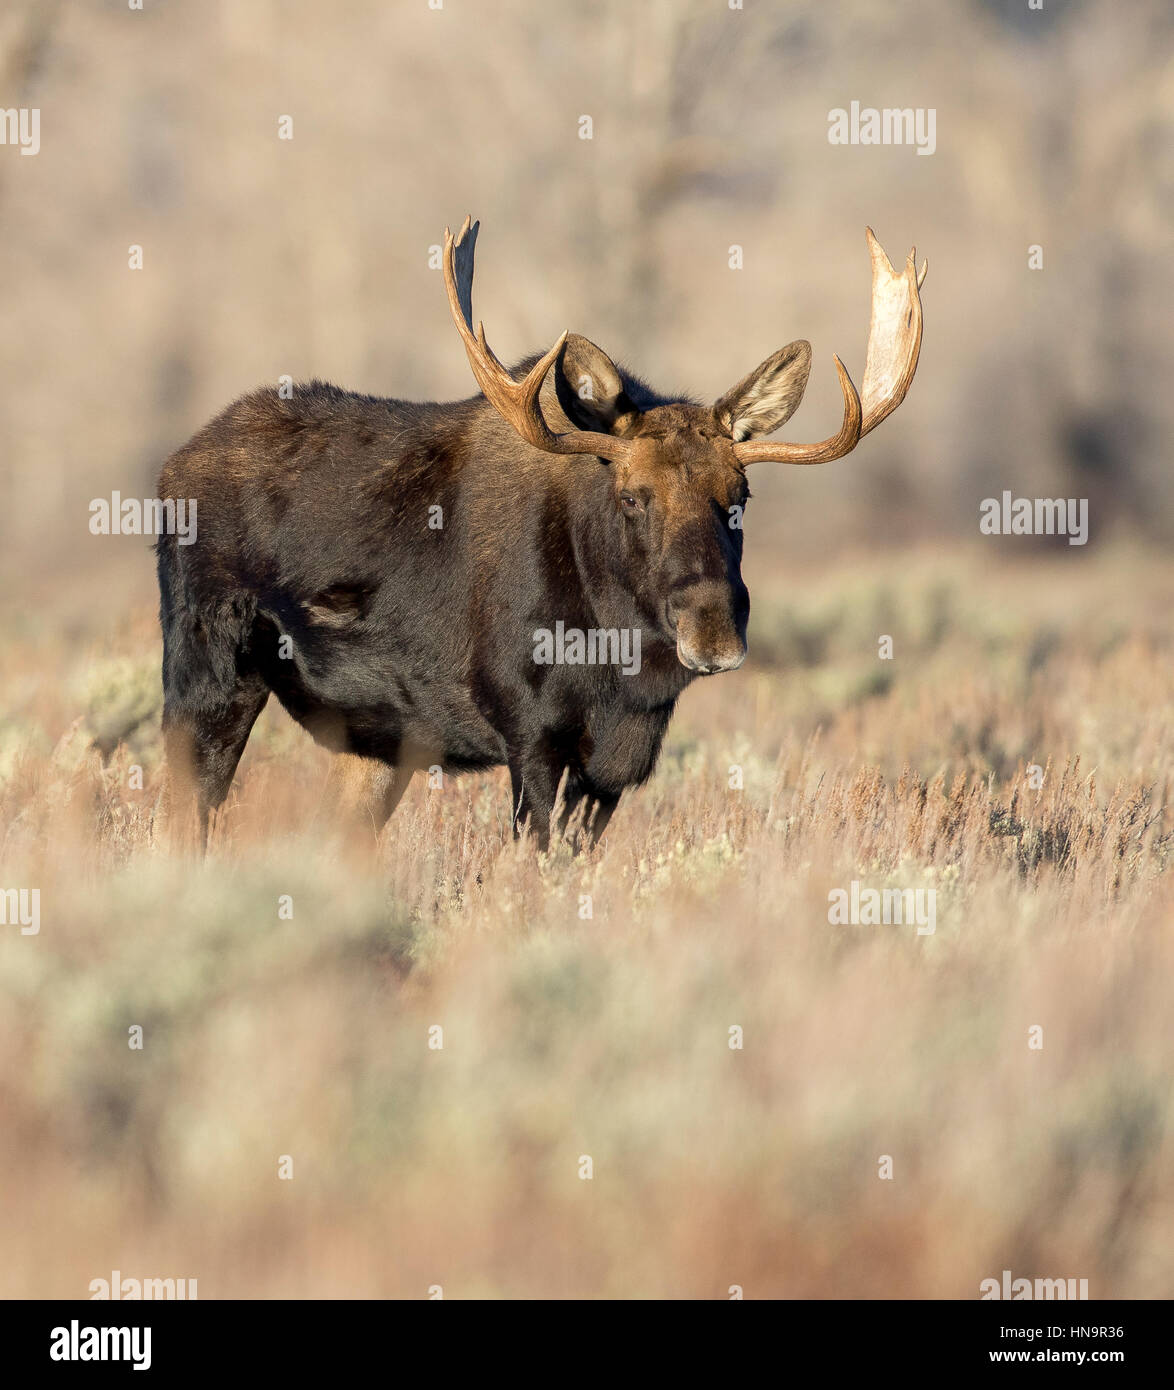 Bull moose en artemisa pradera permanente en otoño Foto de stock